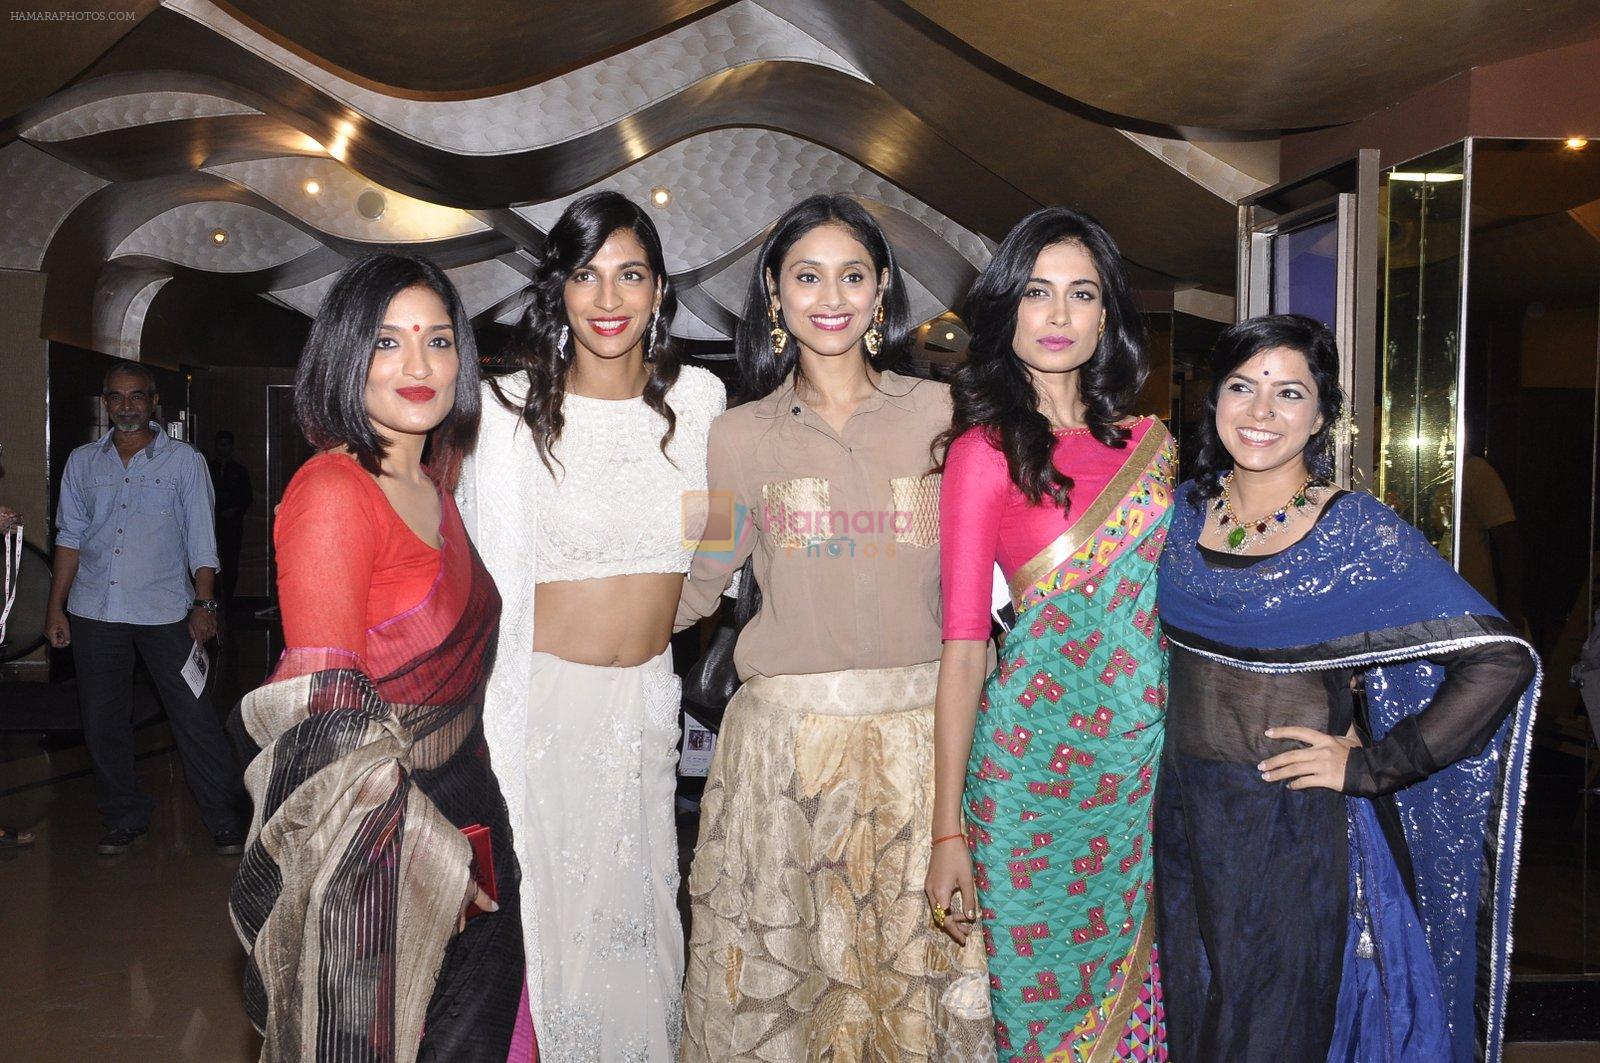 Sandhya Mridul, Anushka Manchanda, Sarah Jane  at Angry Indian Goddesses screening on 3rd Nov 2015